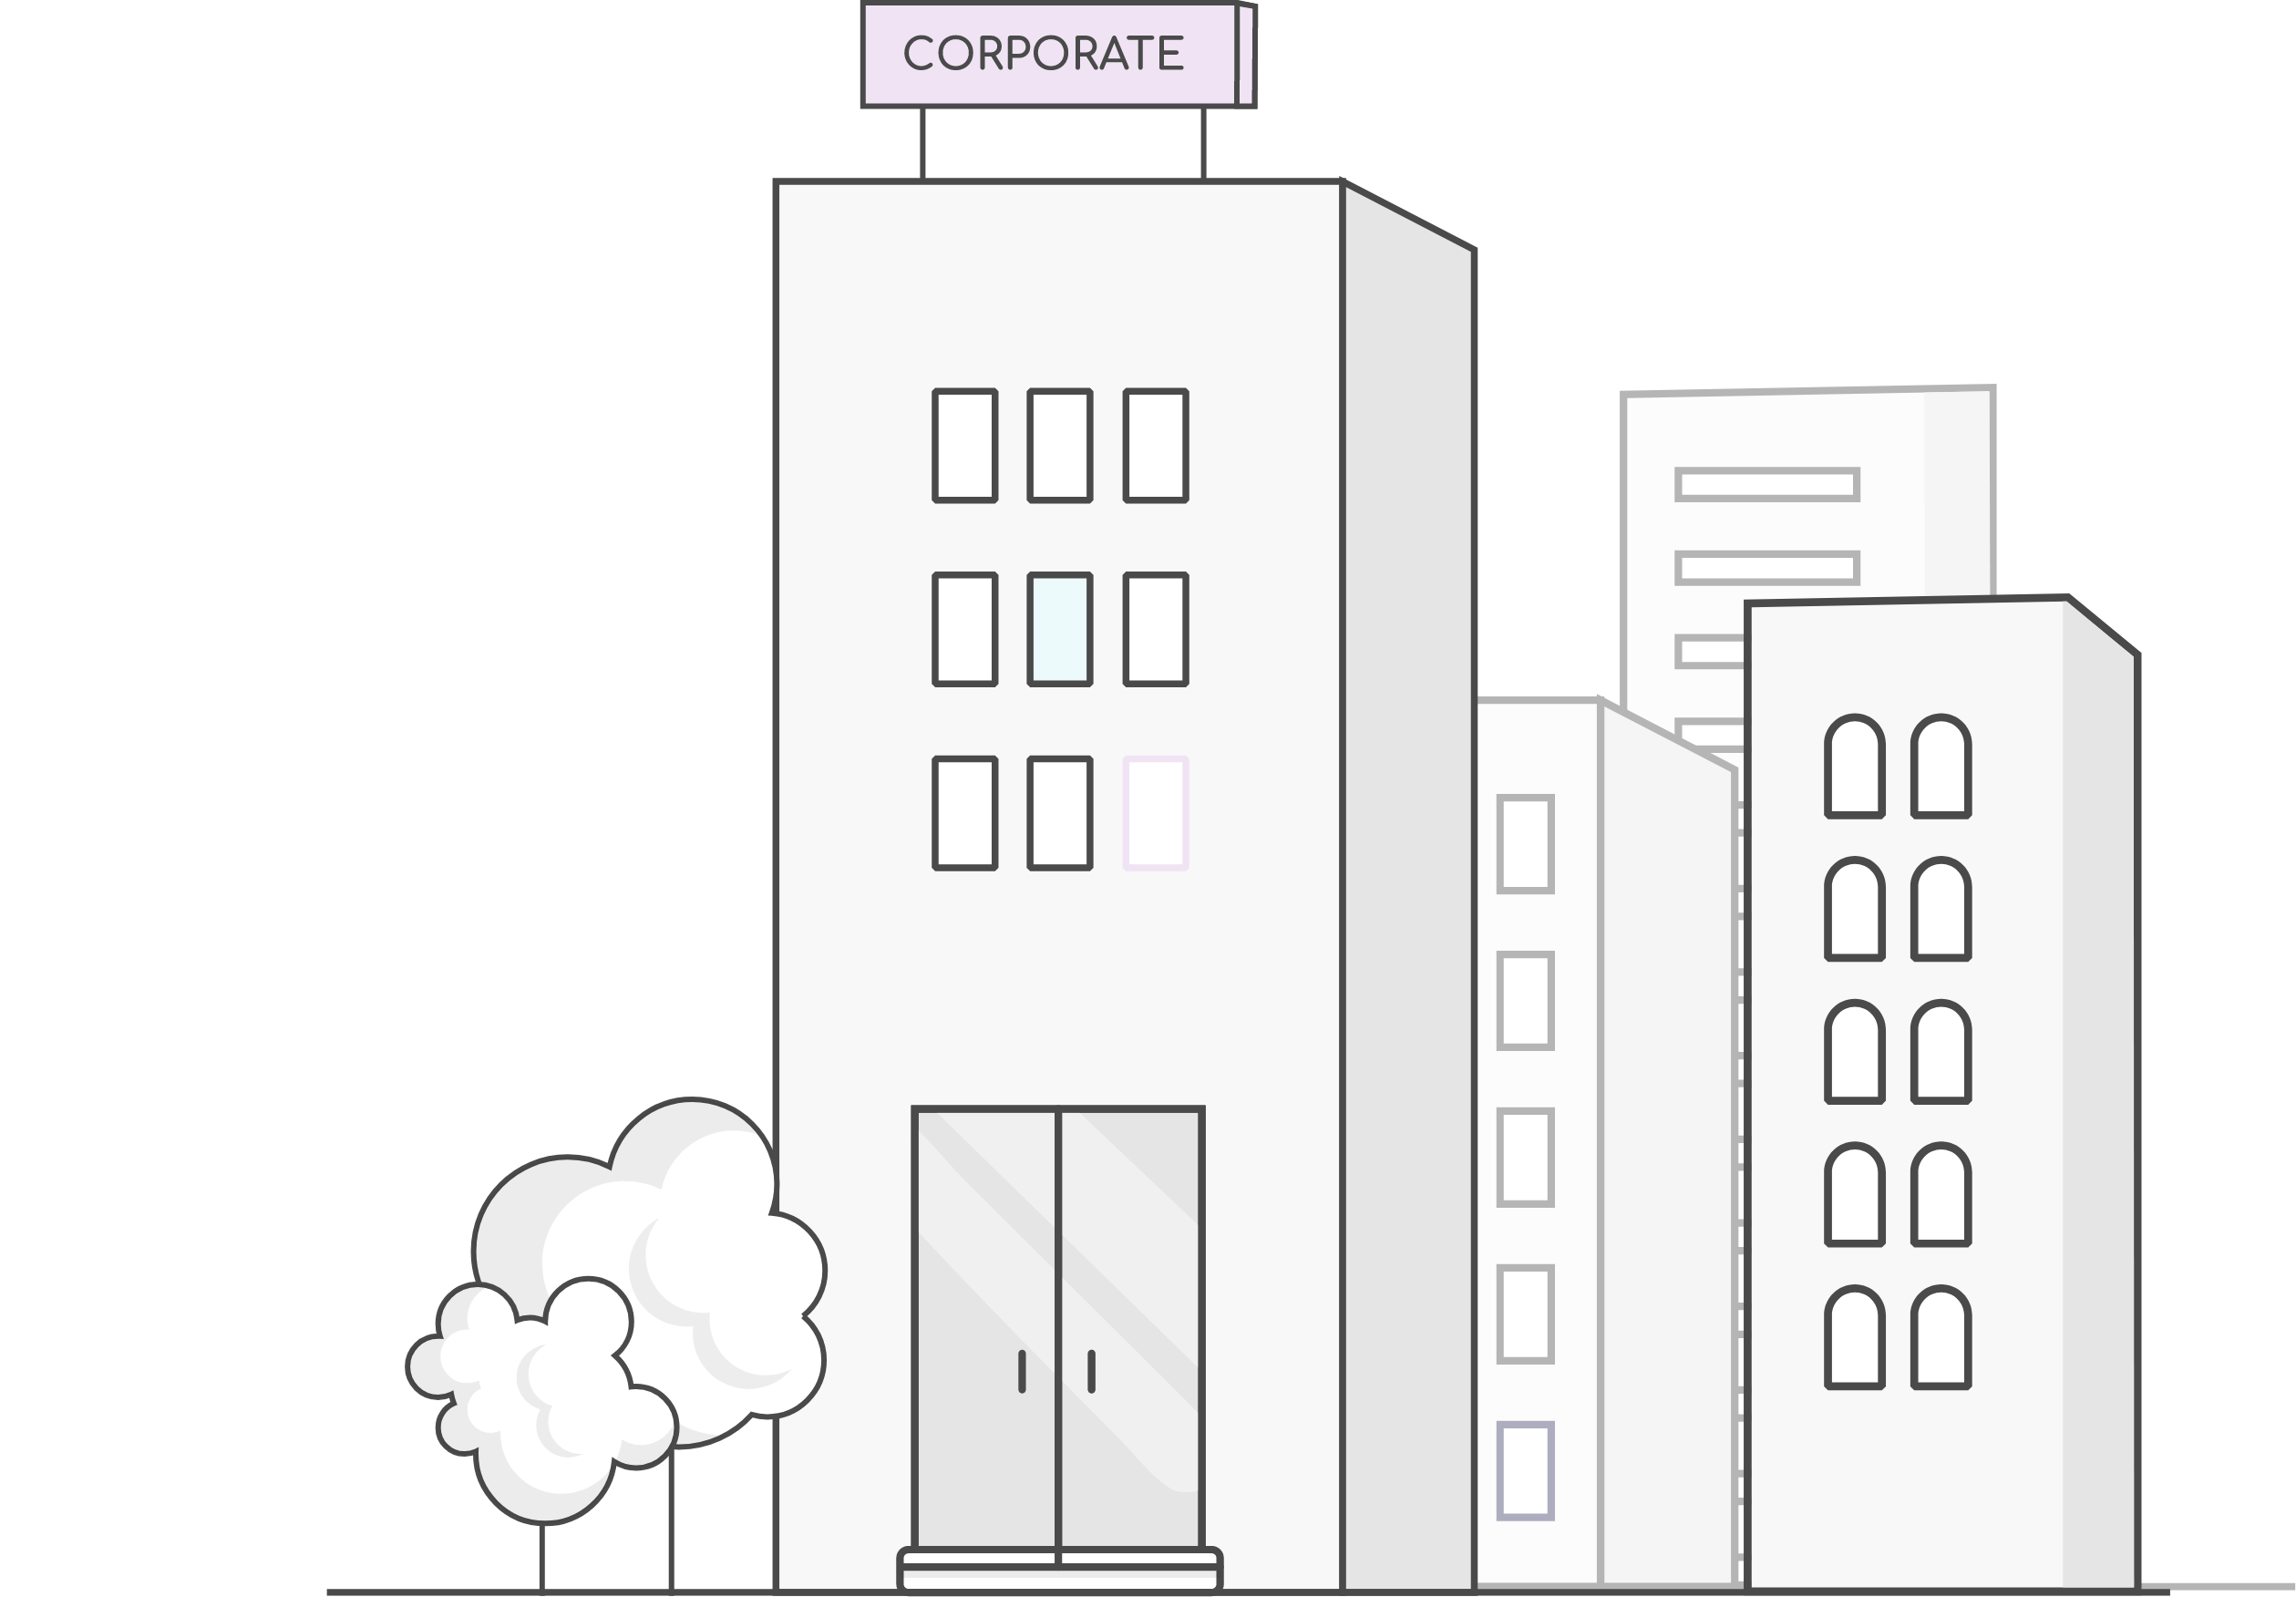 Corporate building illustrations